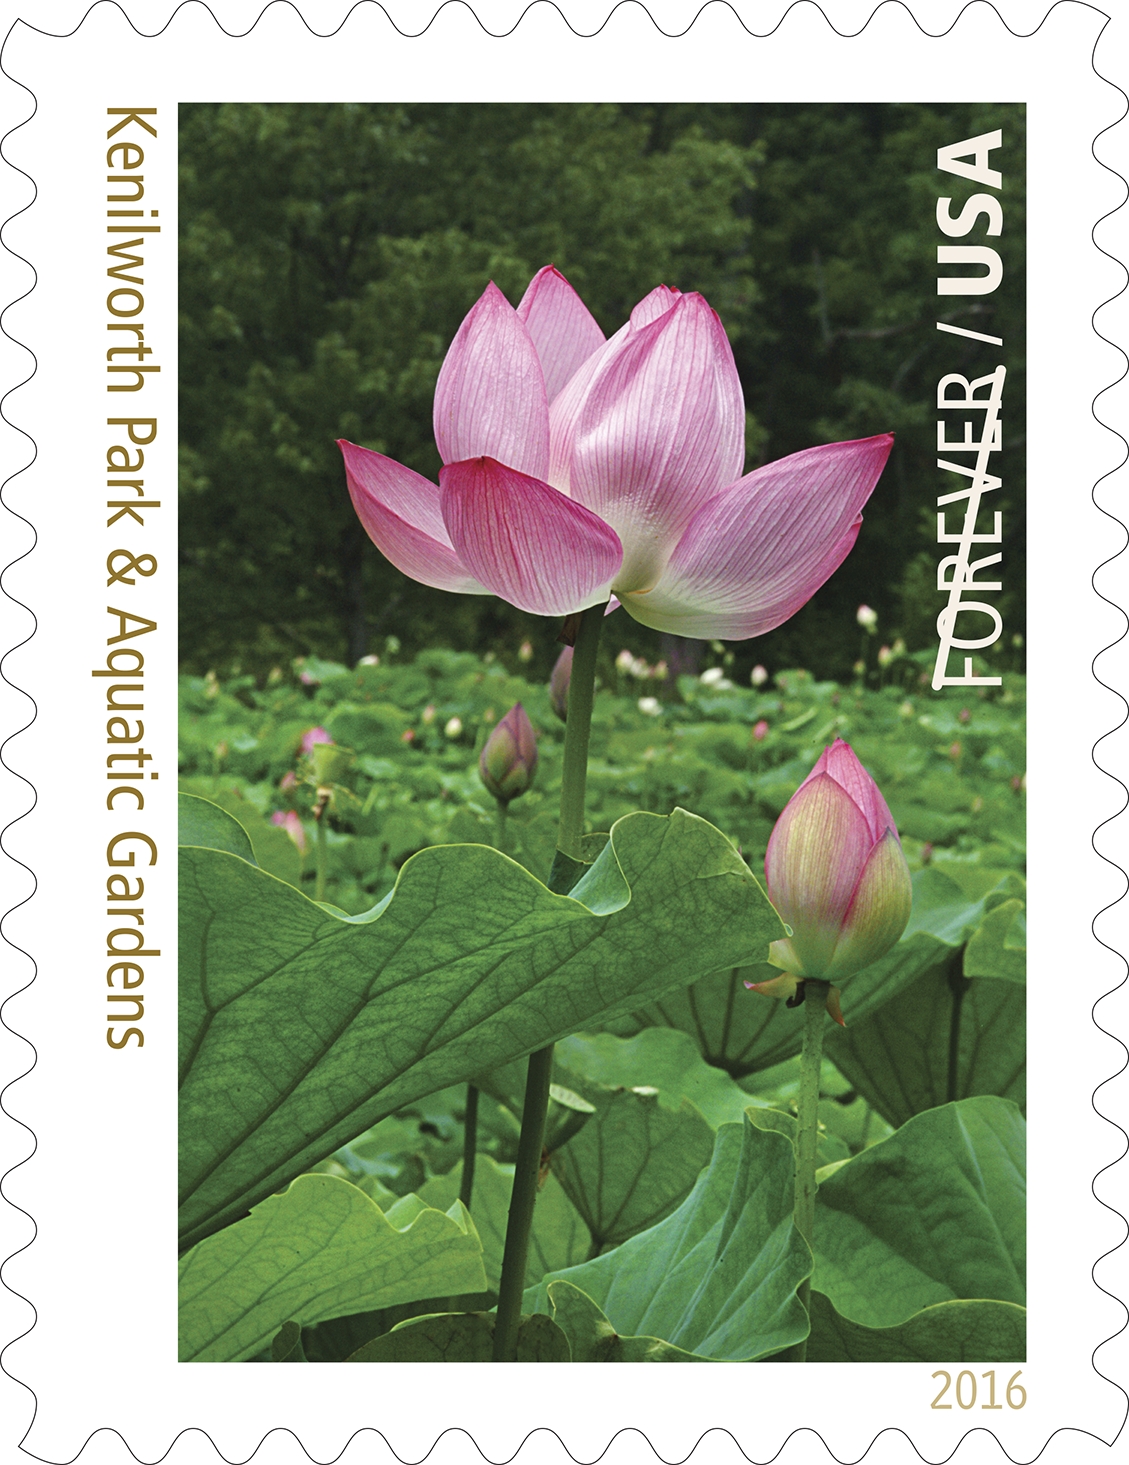 Kenilworth Park & Aquatic Gardens stamp